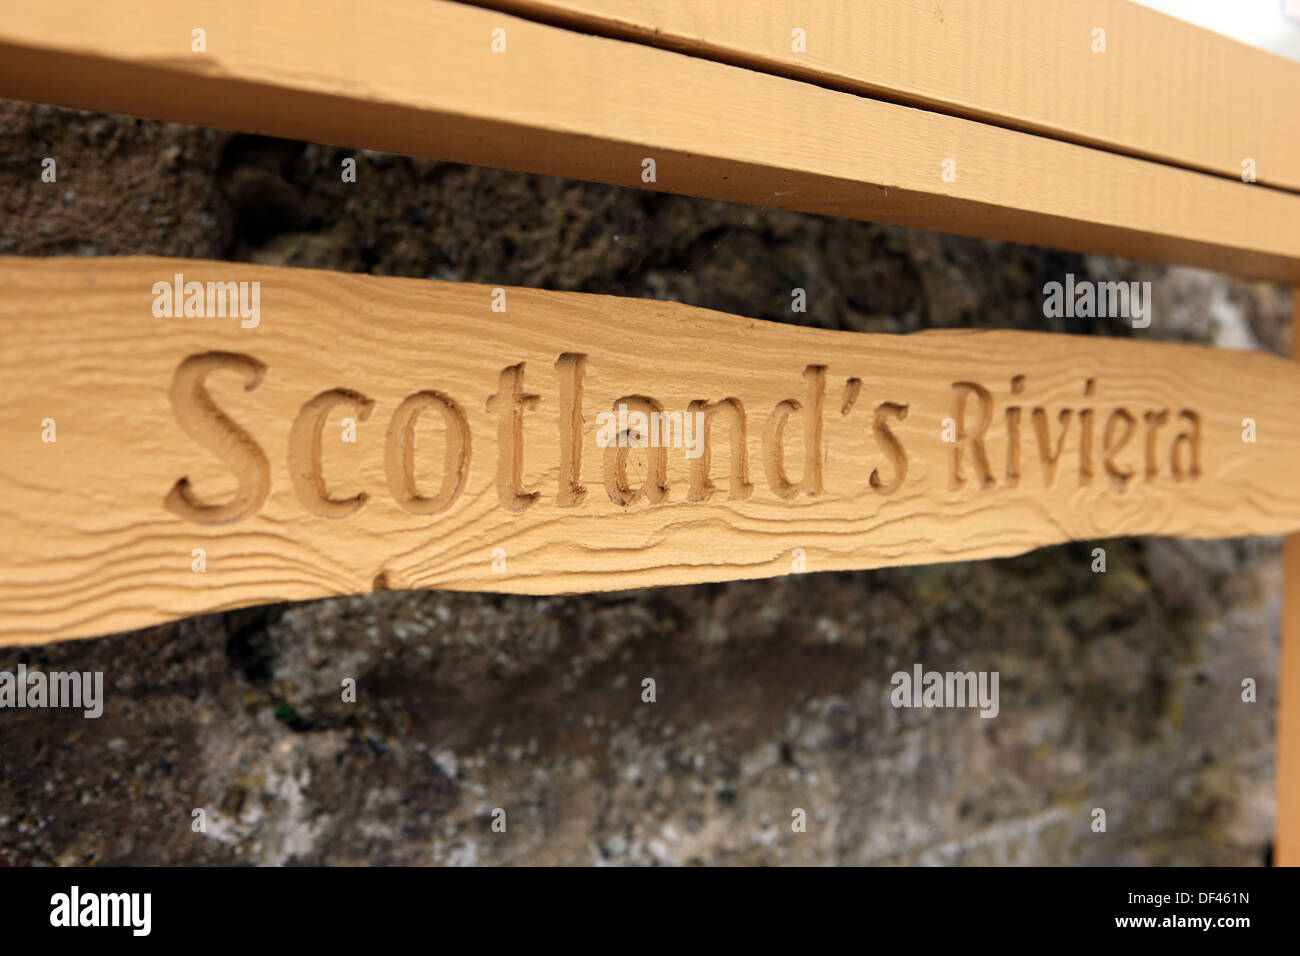 Scotland's Riviera wooden sign in the Fife coastal town of Aberdour Stock Photo